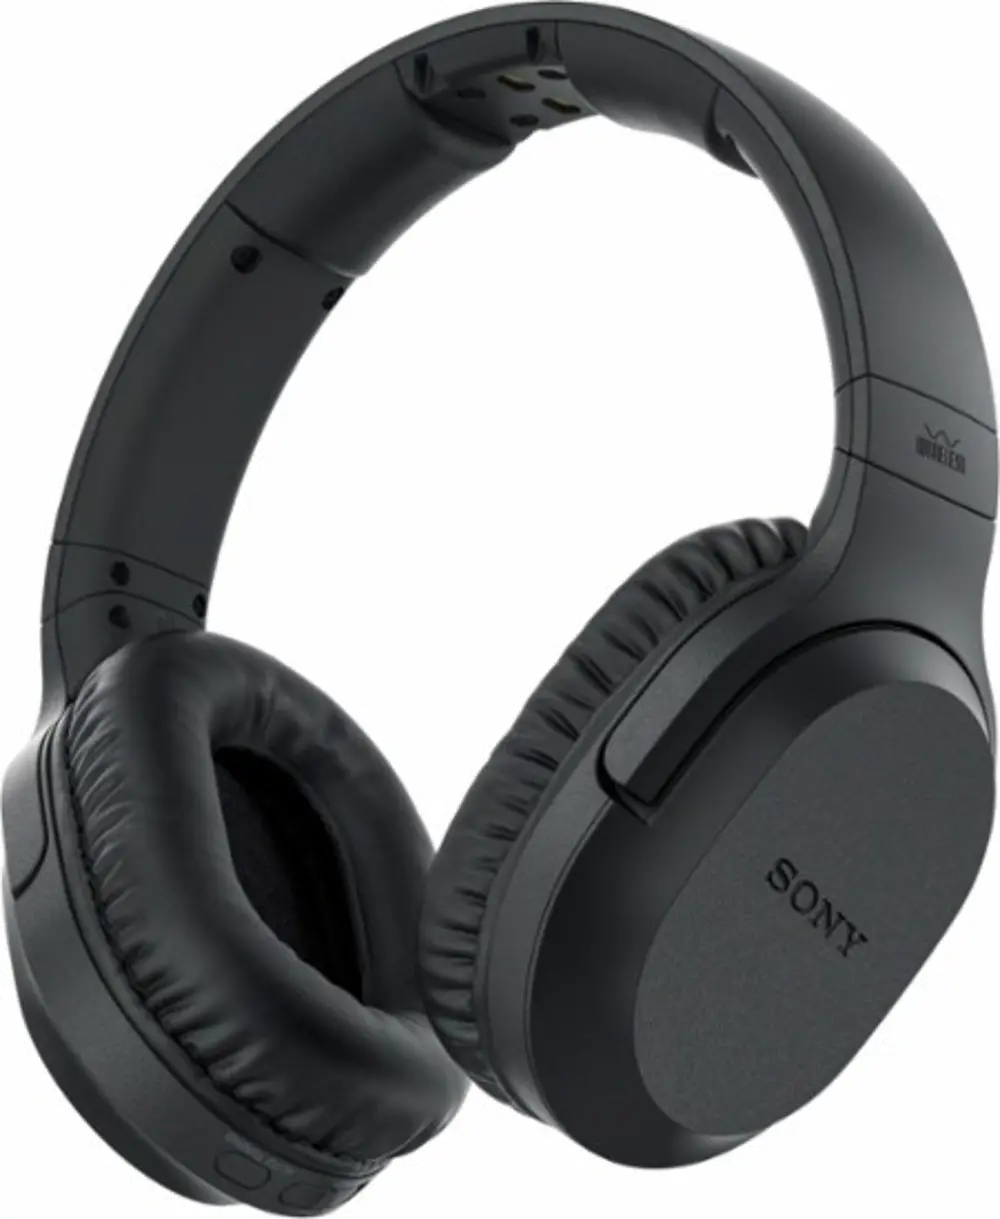 MDRRF995RK Sony On Ear Wireless Noise Reducing Headphones - Black-1